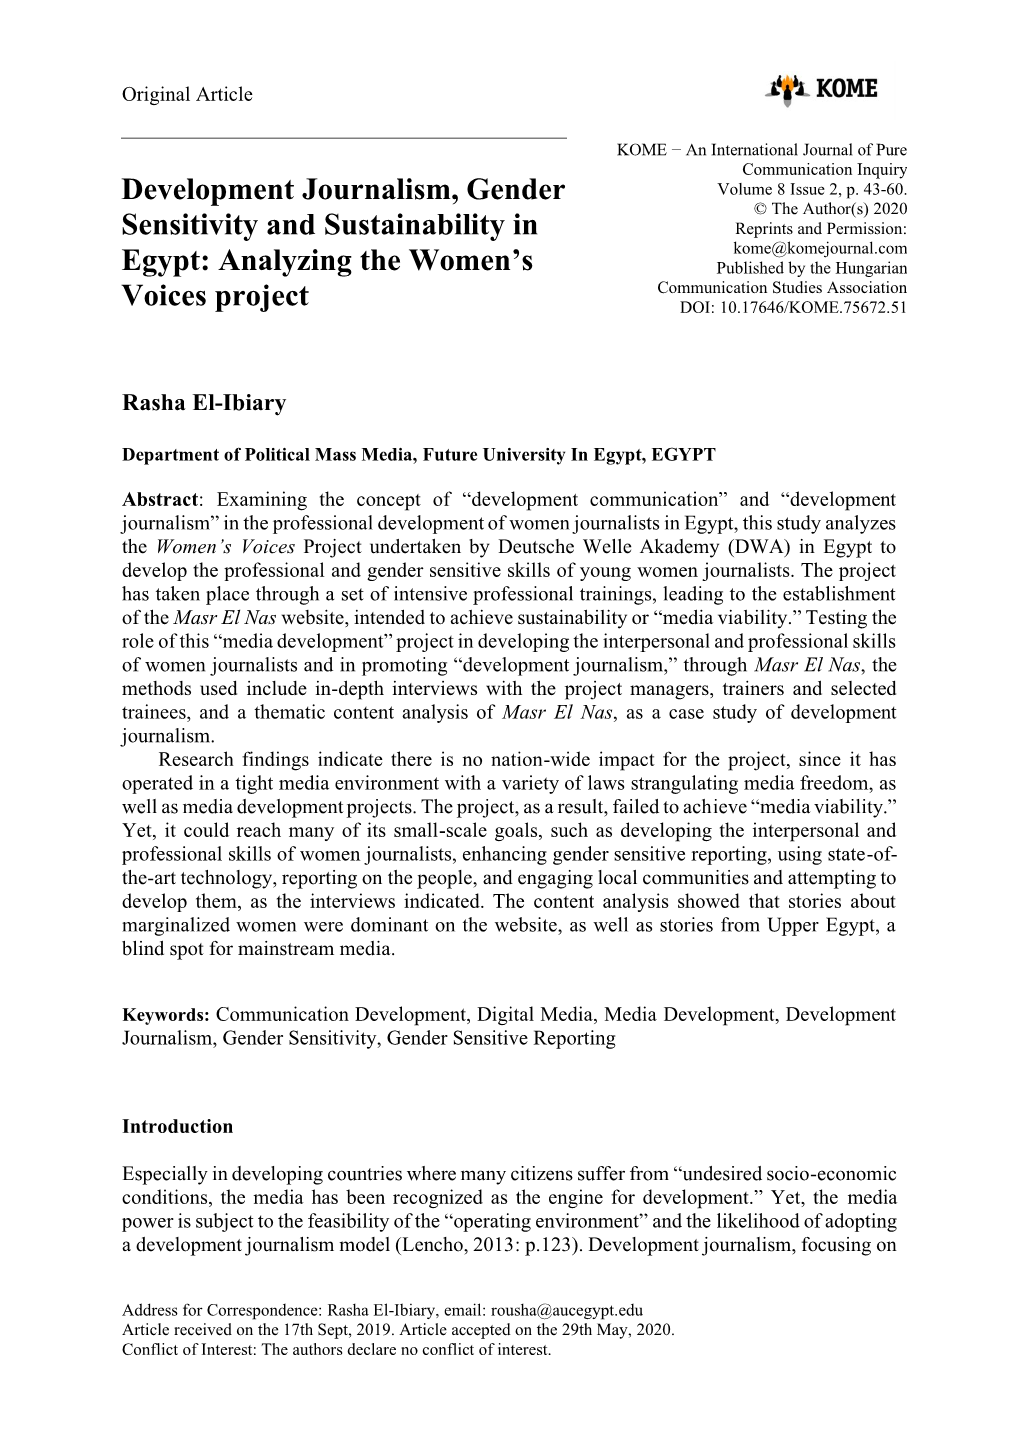 Development Journalism, Gender Sensitivity and Sustainability in Egypt